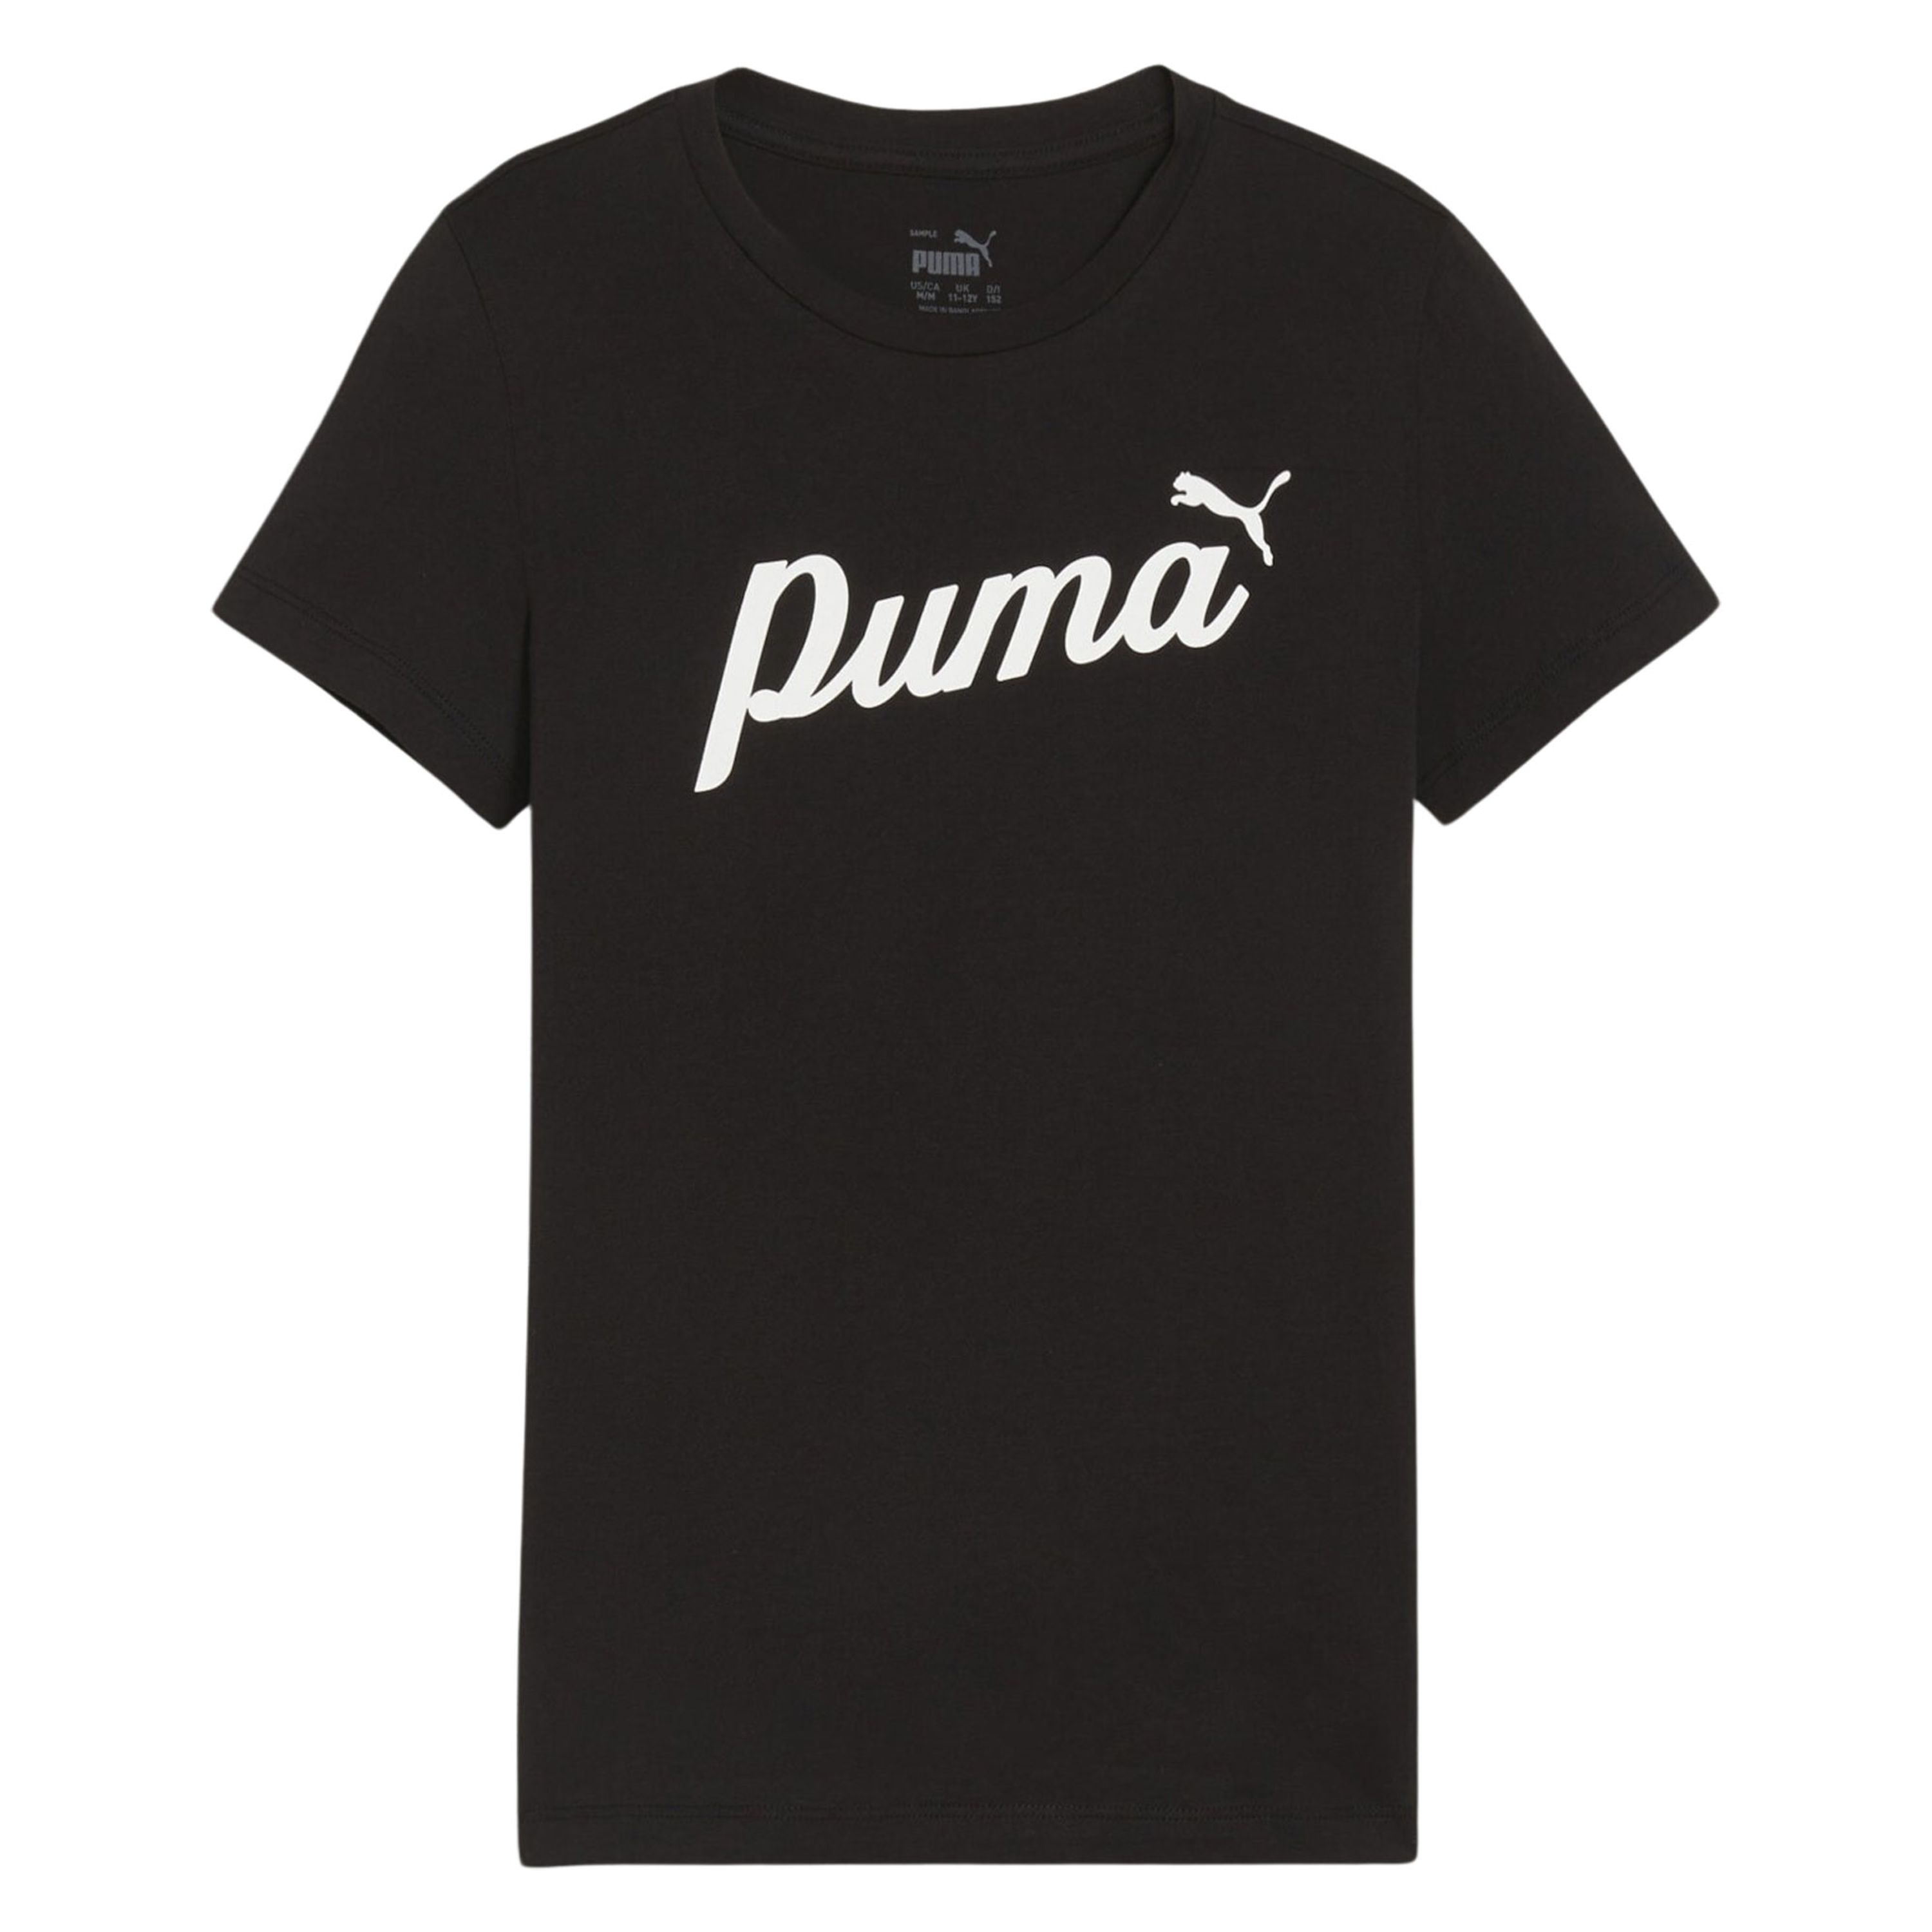 Puma Essentials+ Blossom Shirt Meisjes